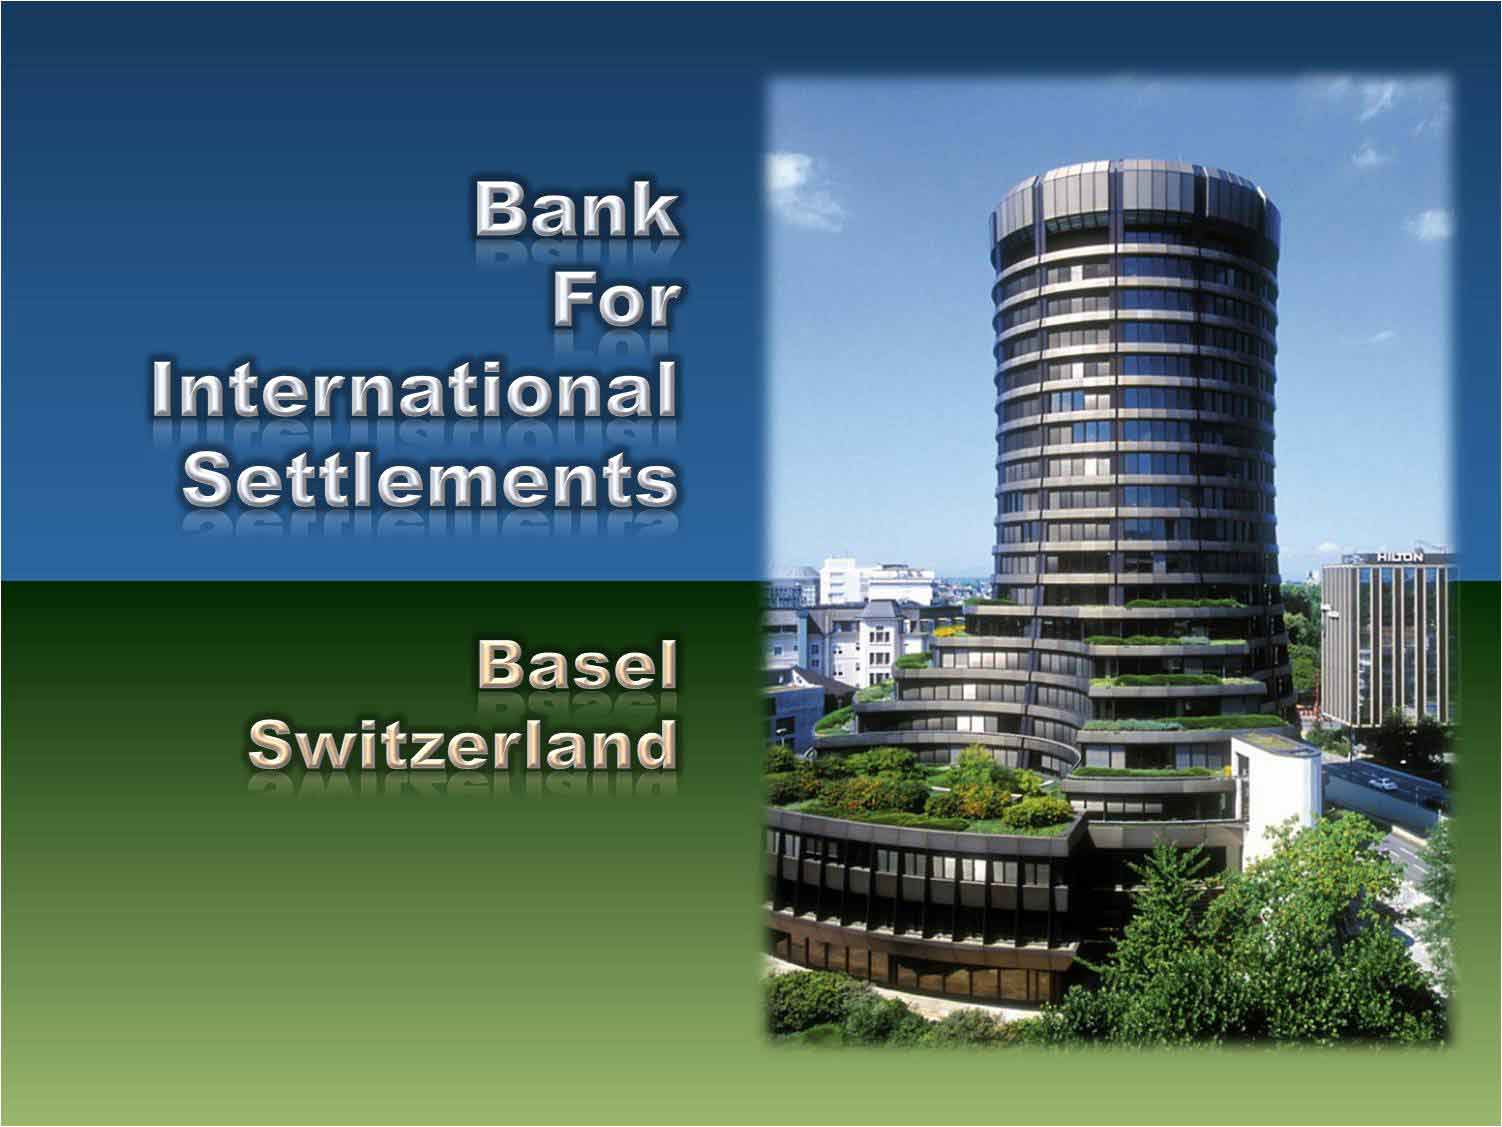 bis-bank-for-international-settlements-basel-switzerland